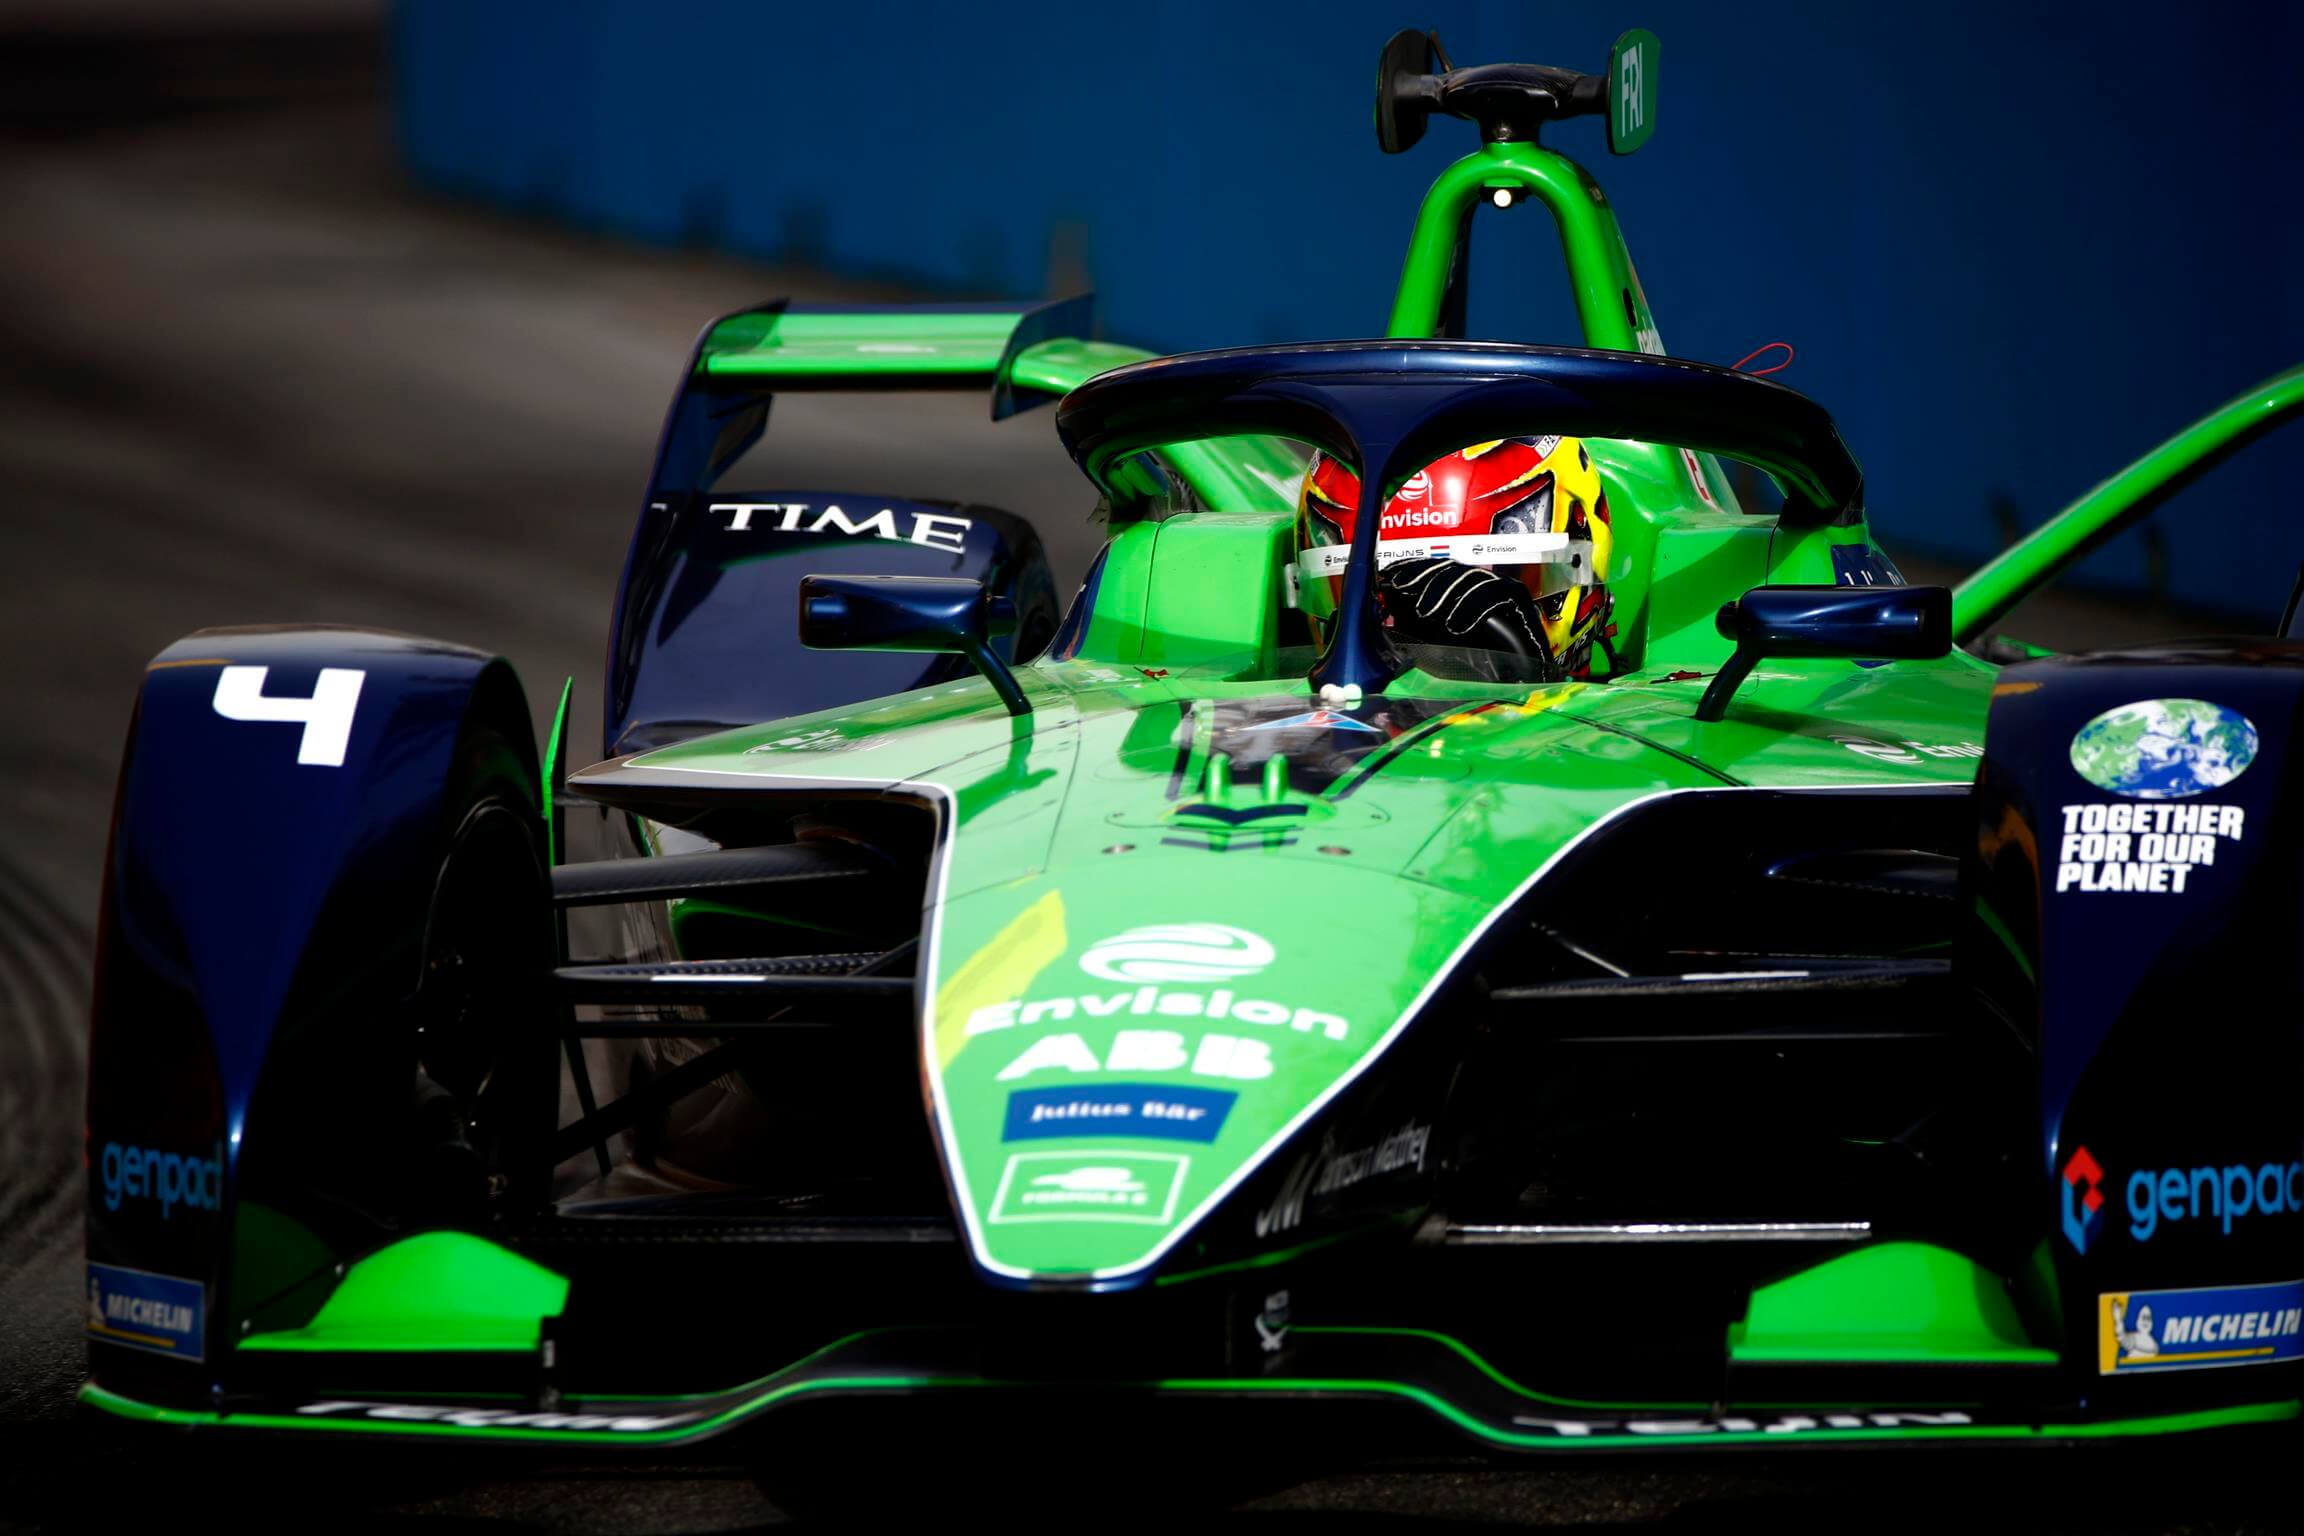 Robin Frijns überglücklich nach Formel-E-Podium in Saudi-Arabien